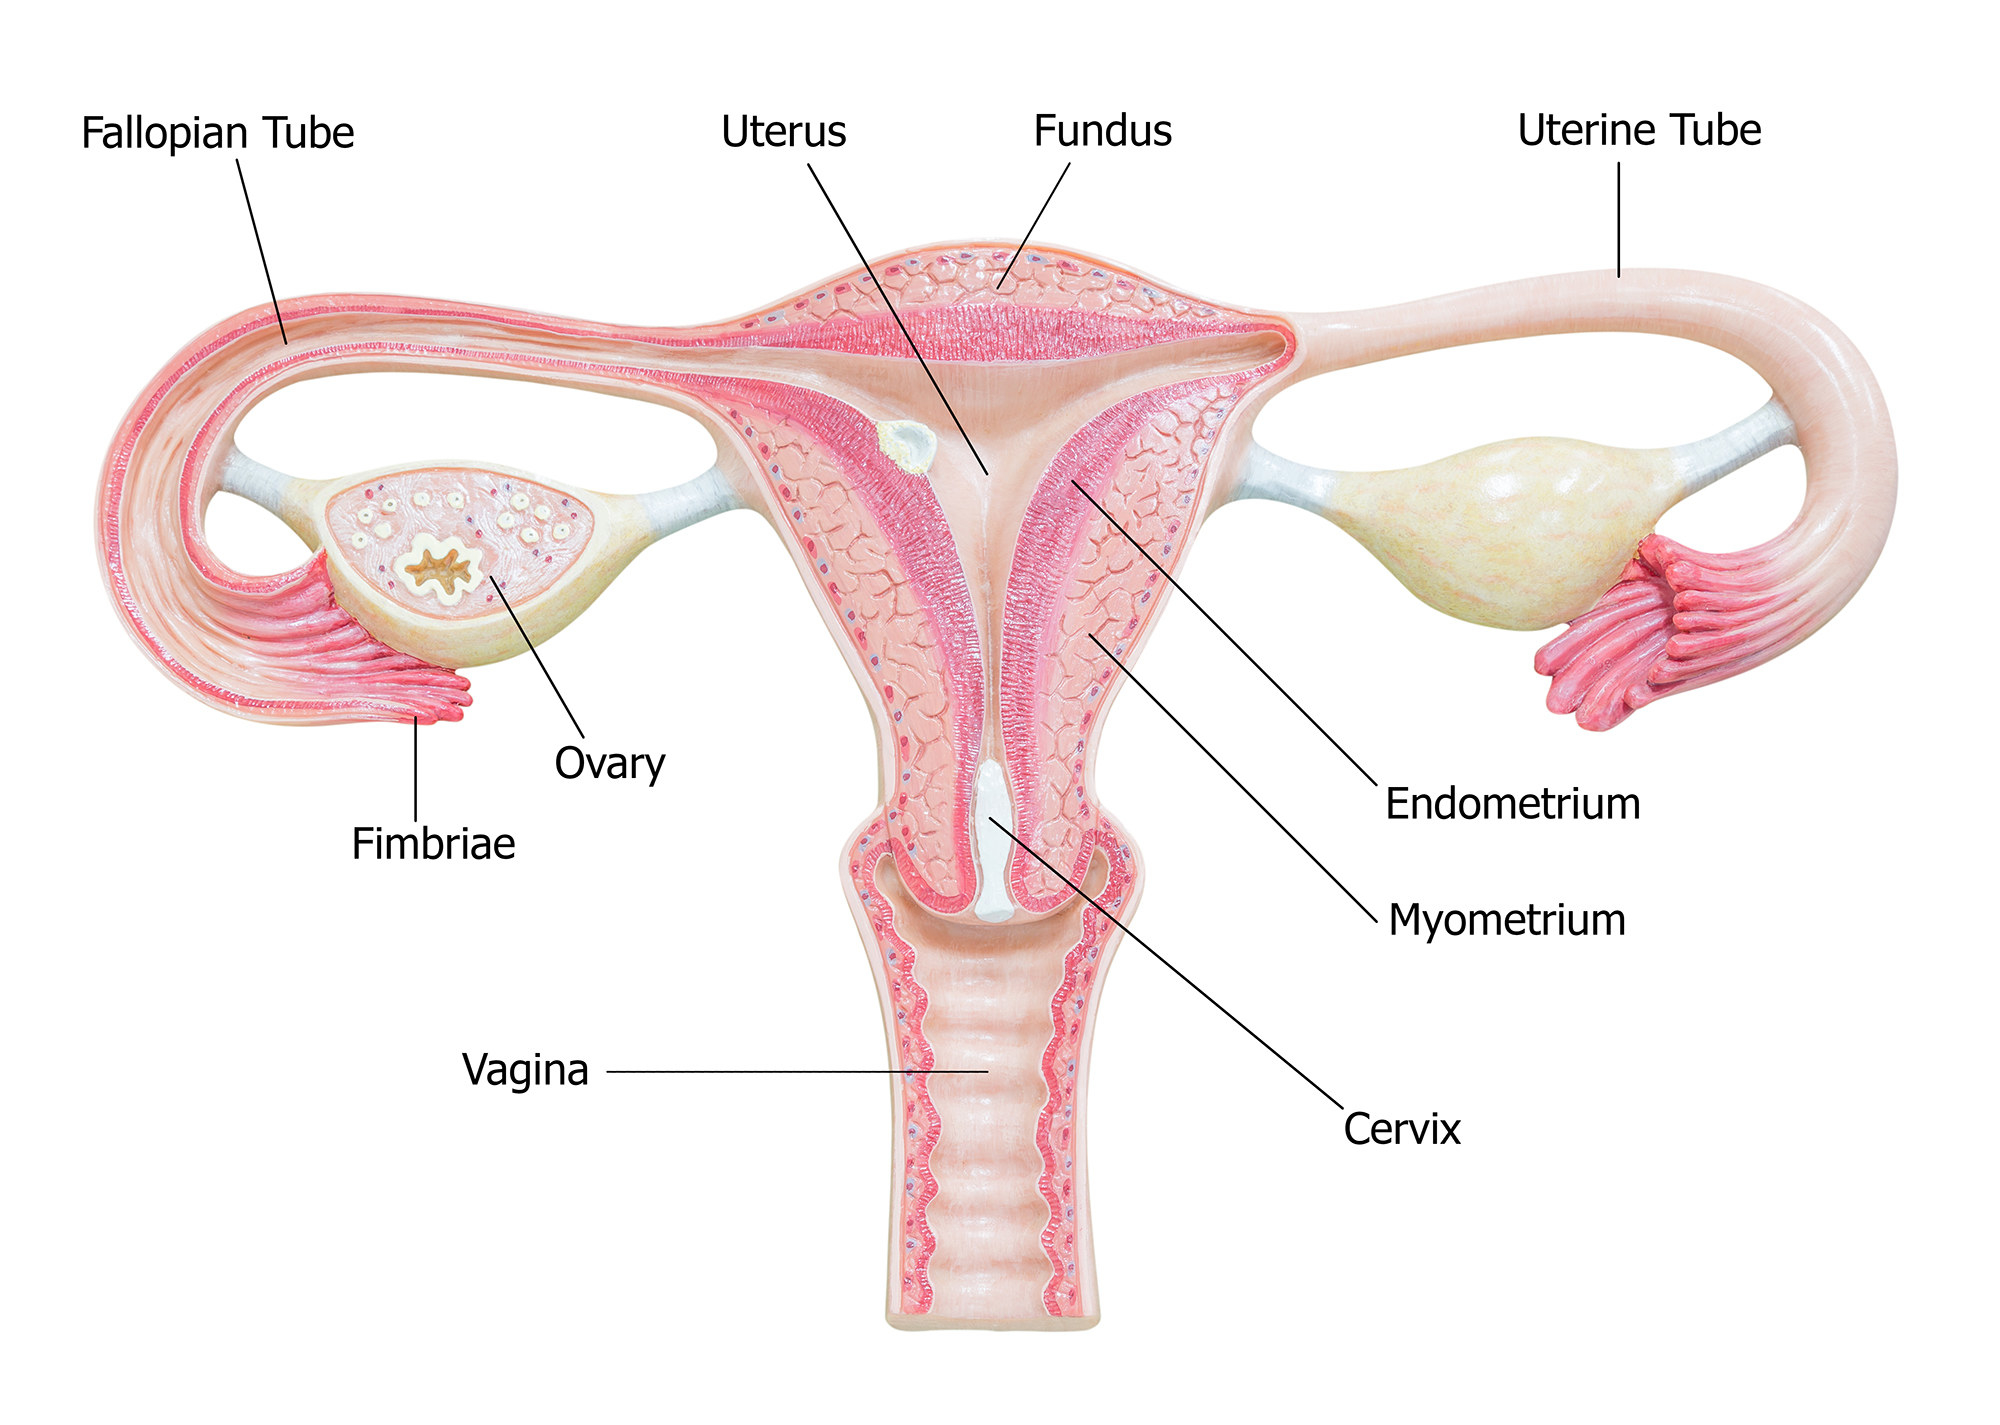 A diagram points out fallopian tube, ovary, uterine tube, uterus, cervix, endometrium, meyometrium, and vagina